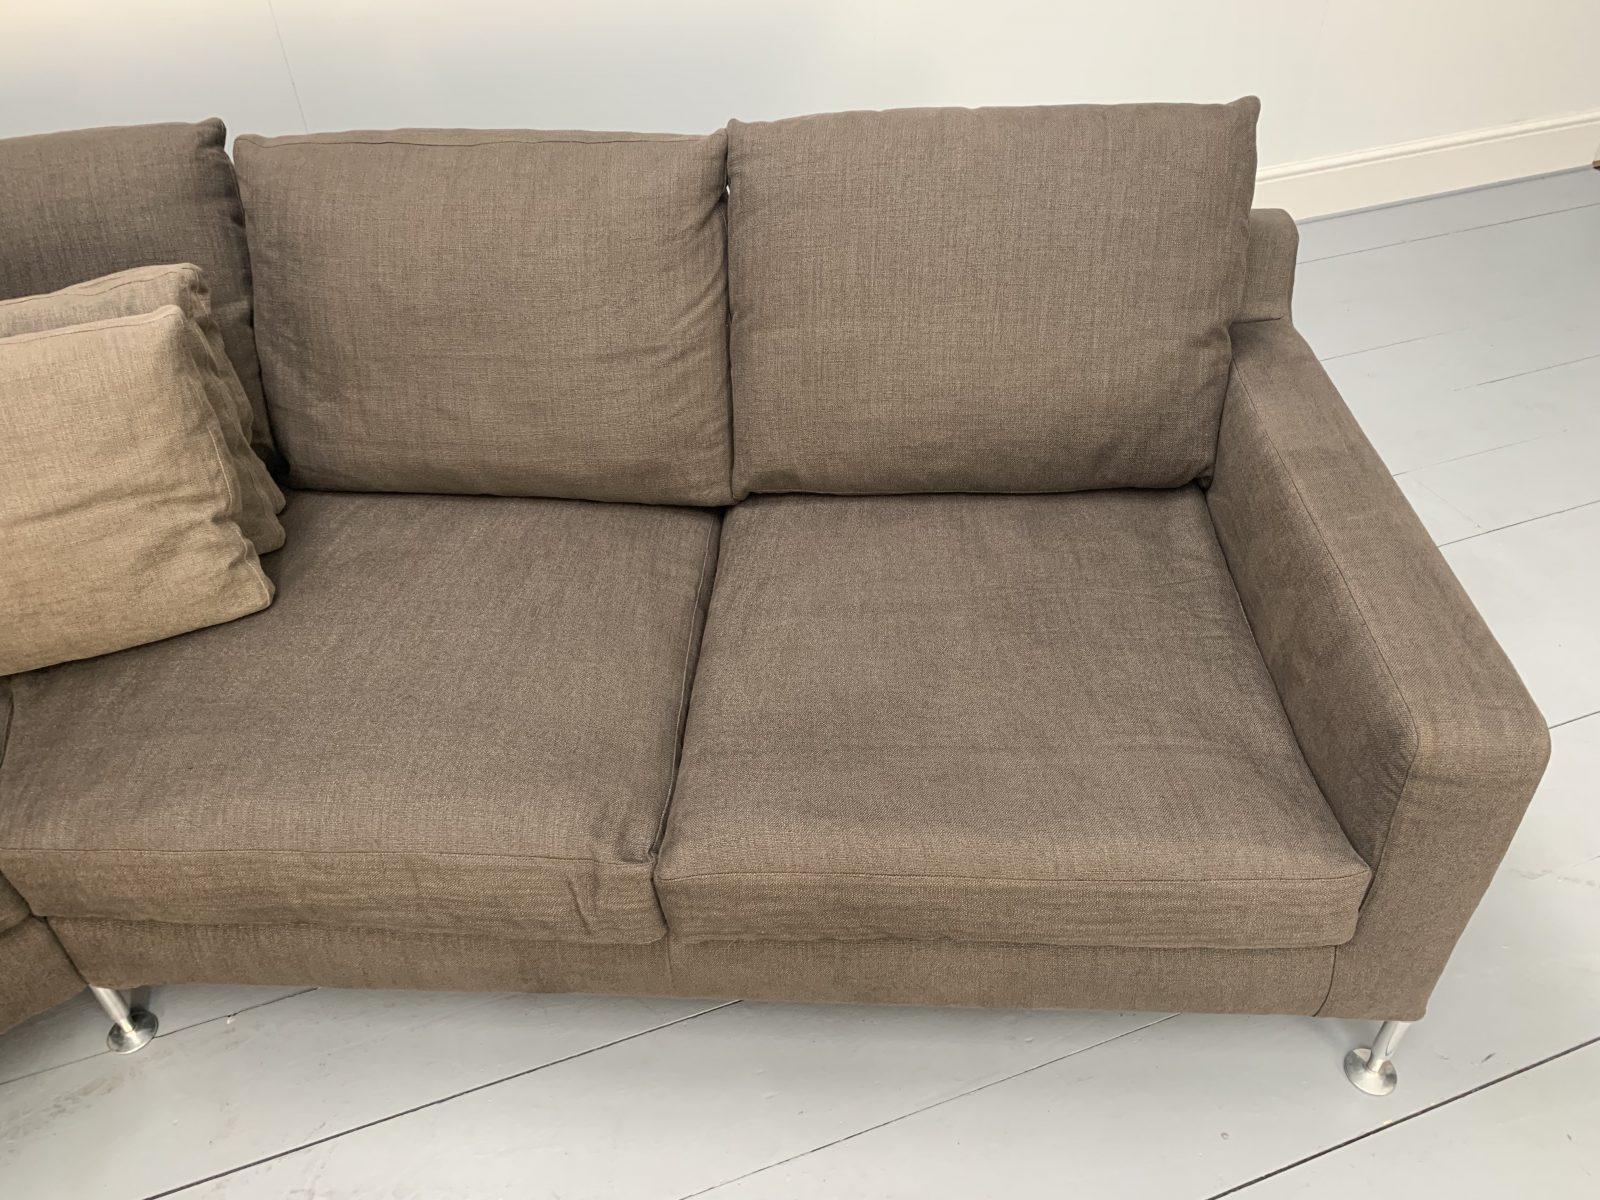 B&B Italia “Harry HL375” 5-Seat Sofa in Dark Brown Linen For Sale 2